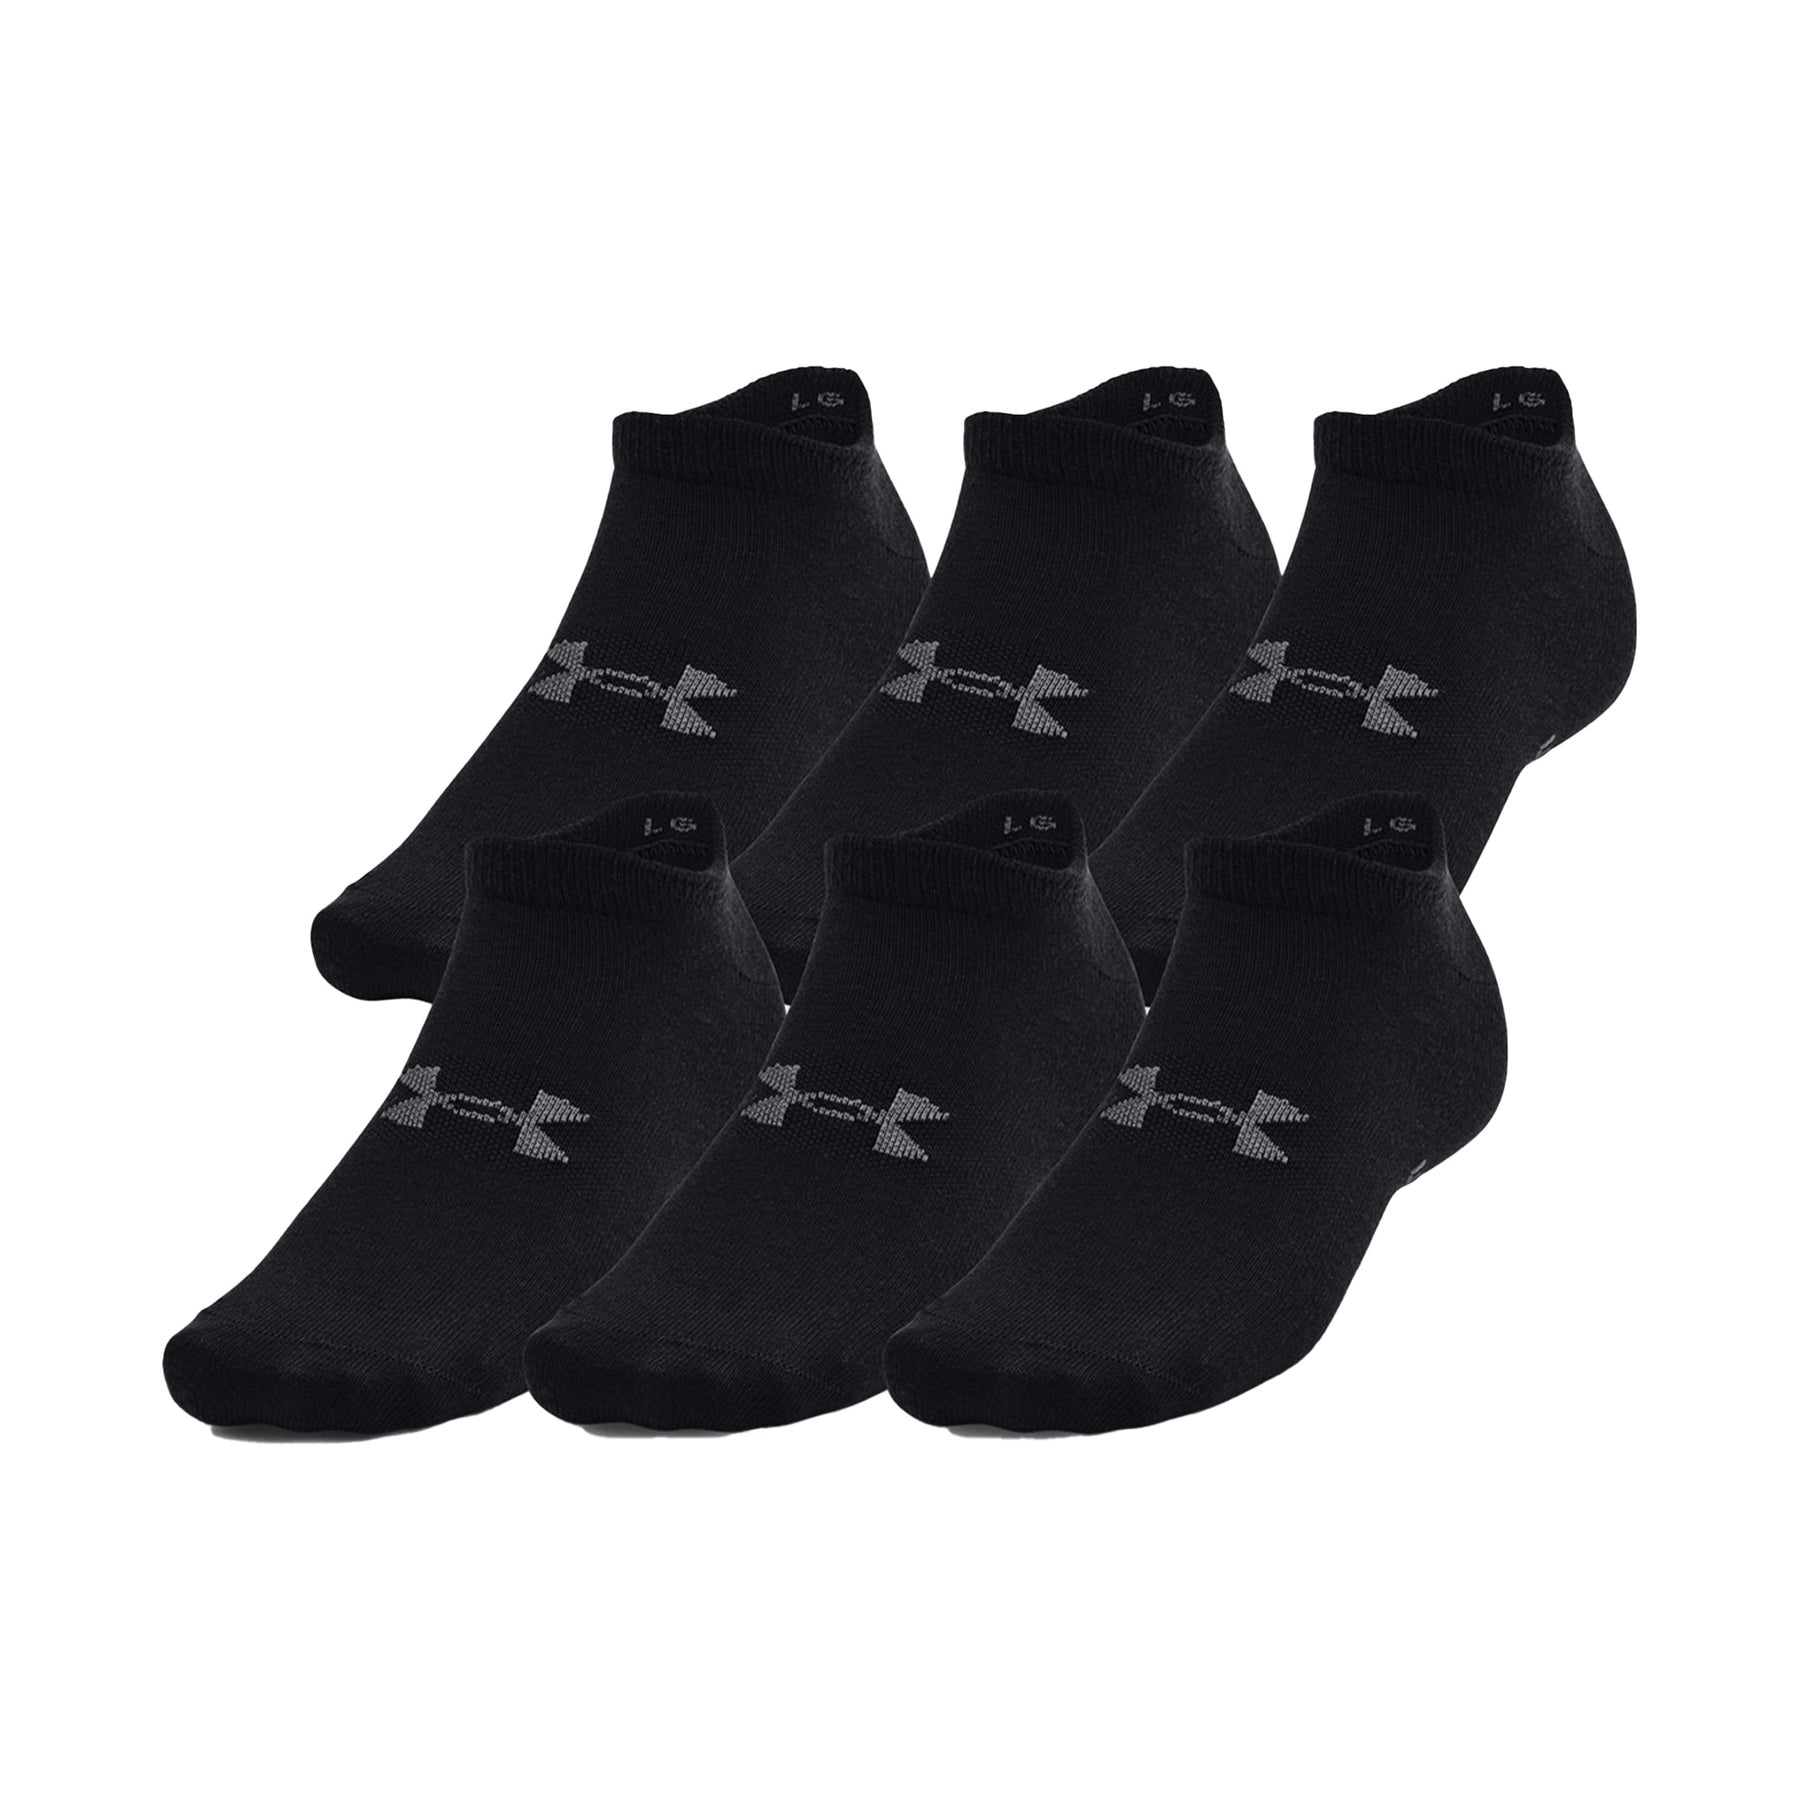 Under Armour No Show Socks 6 Pack: Black